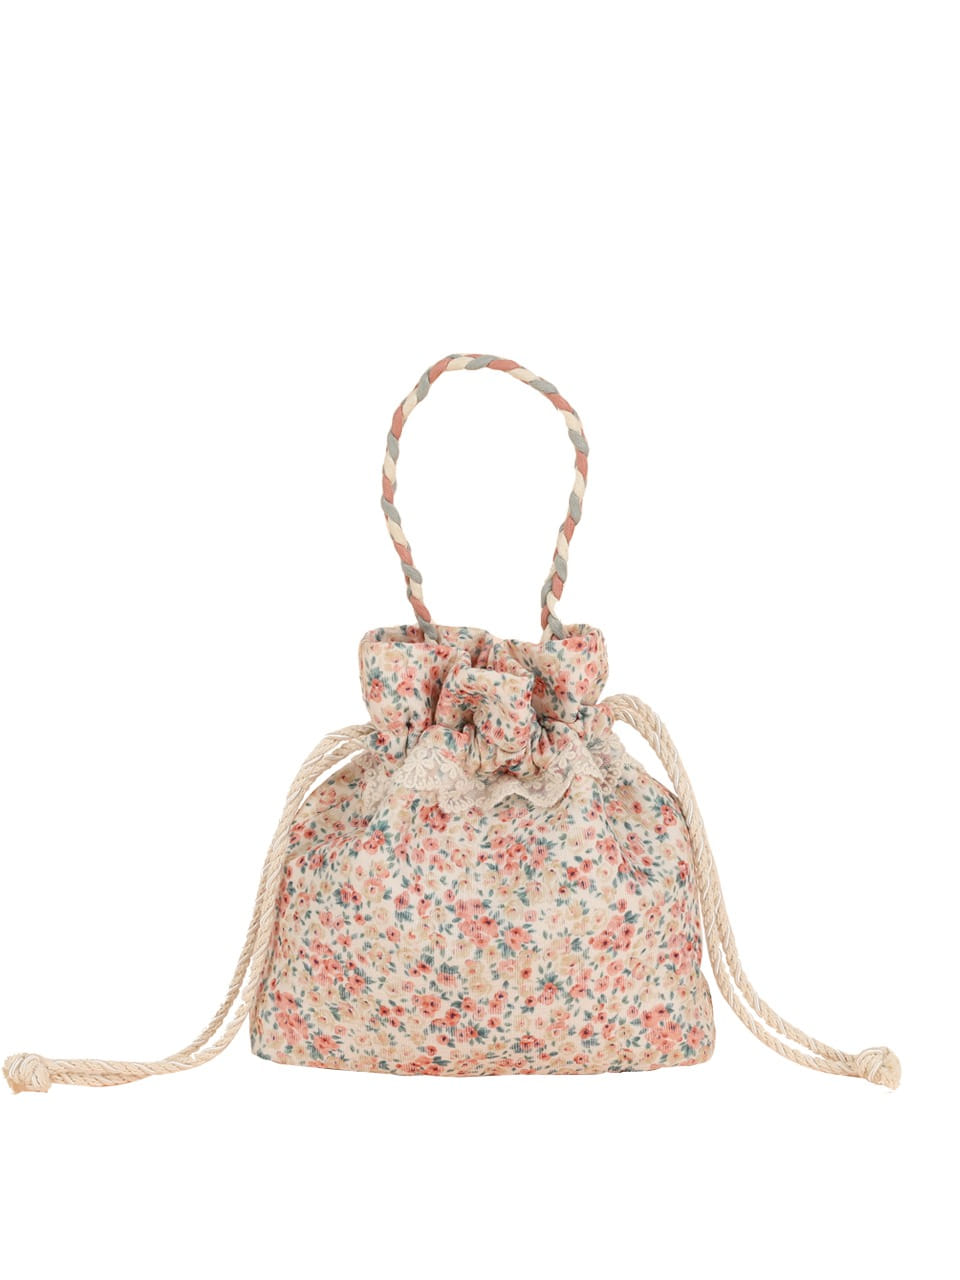 Lace drawstring bag - floral - ovuni